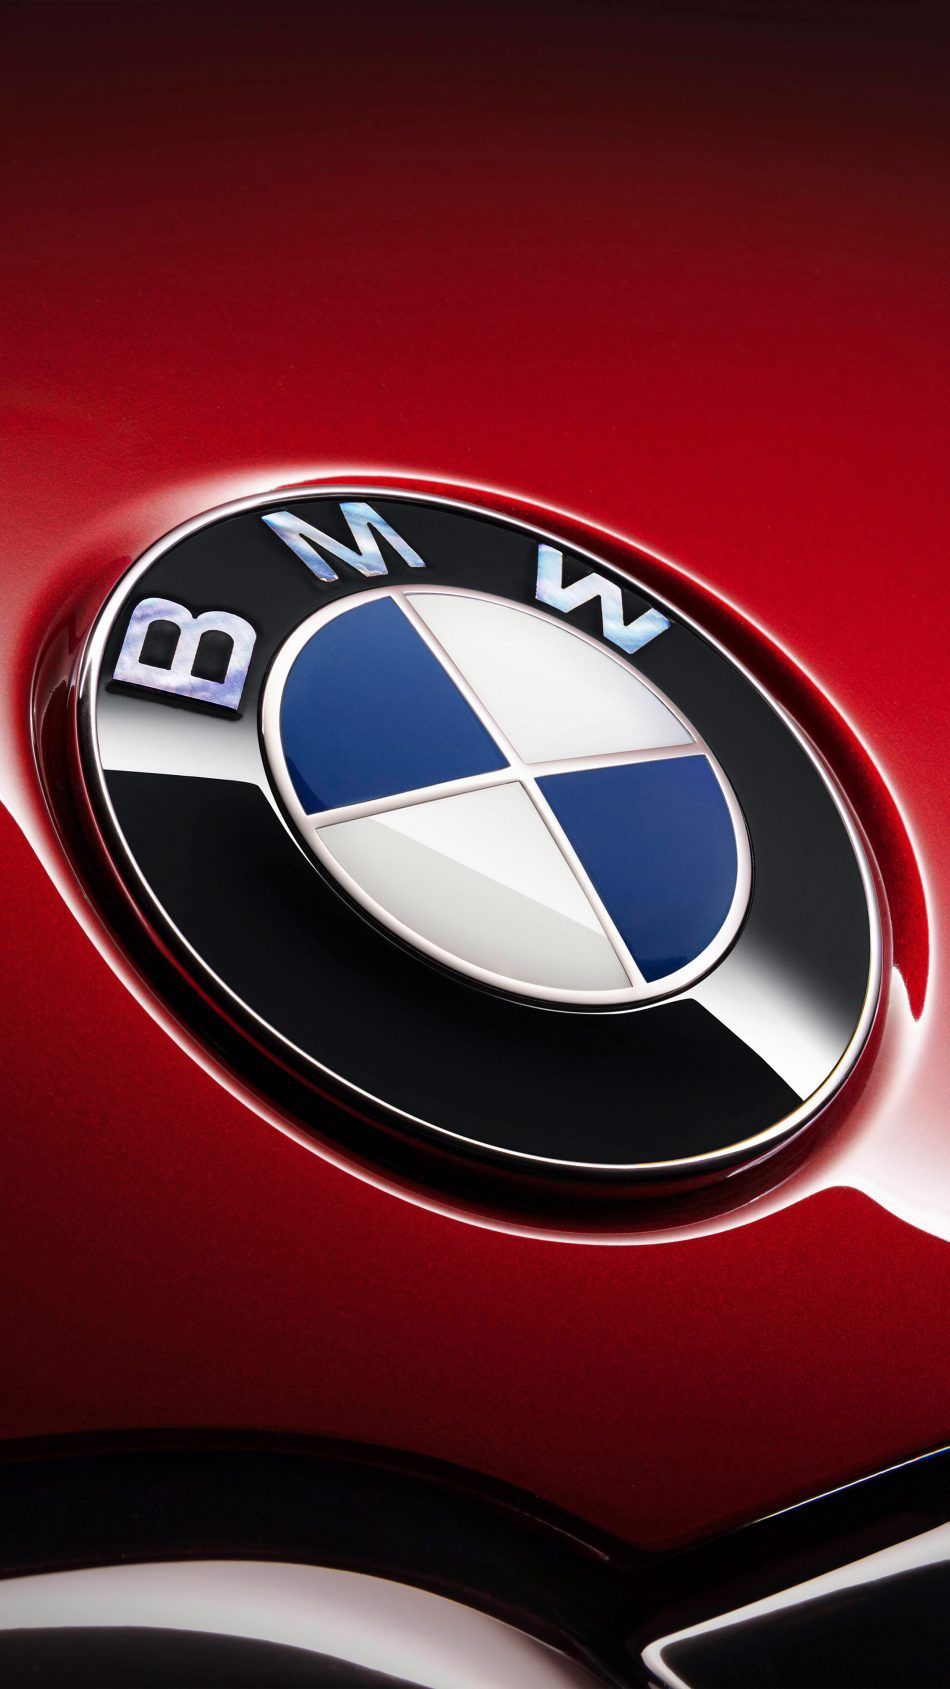 BMW 7 Series Logo 4K Ultra HD Mobile Wallpaper. Bmw iphone